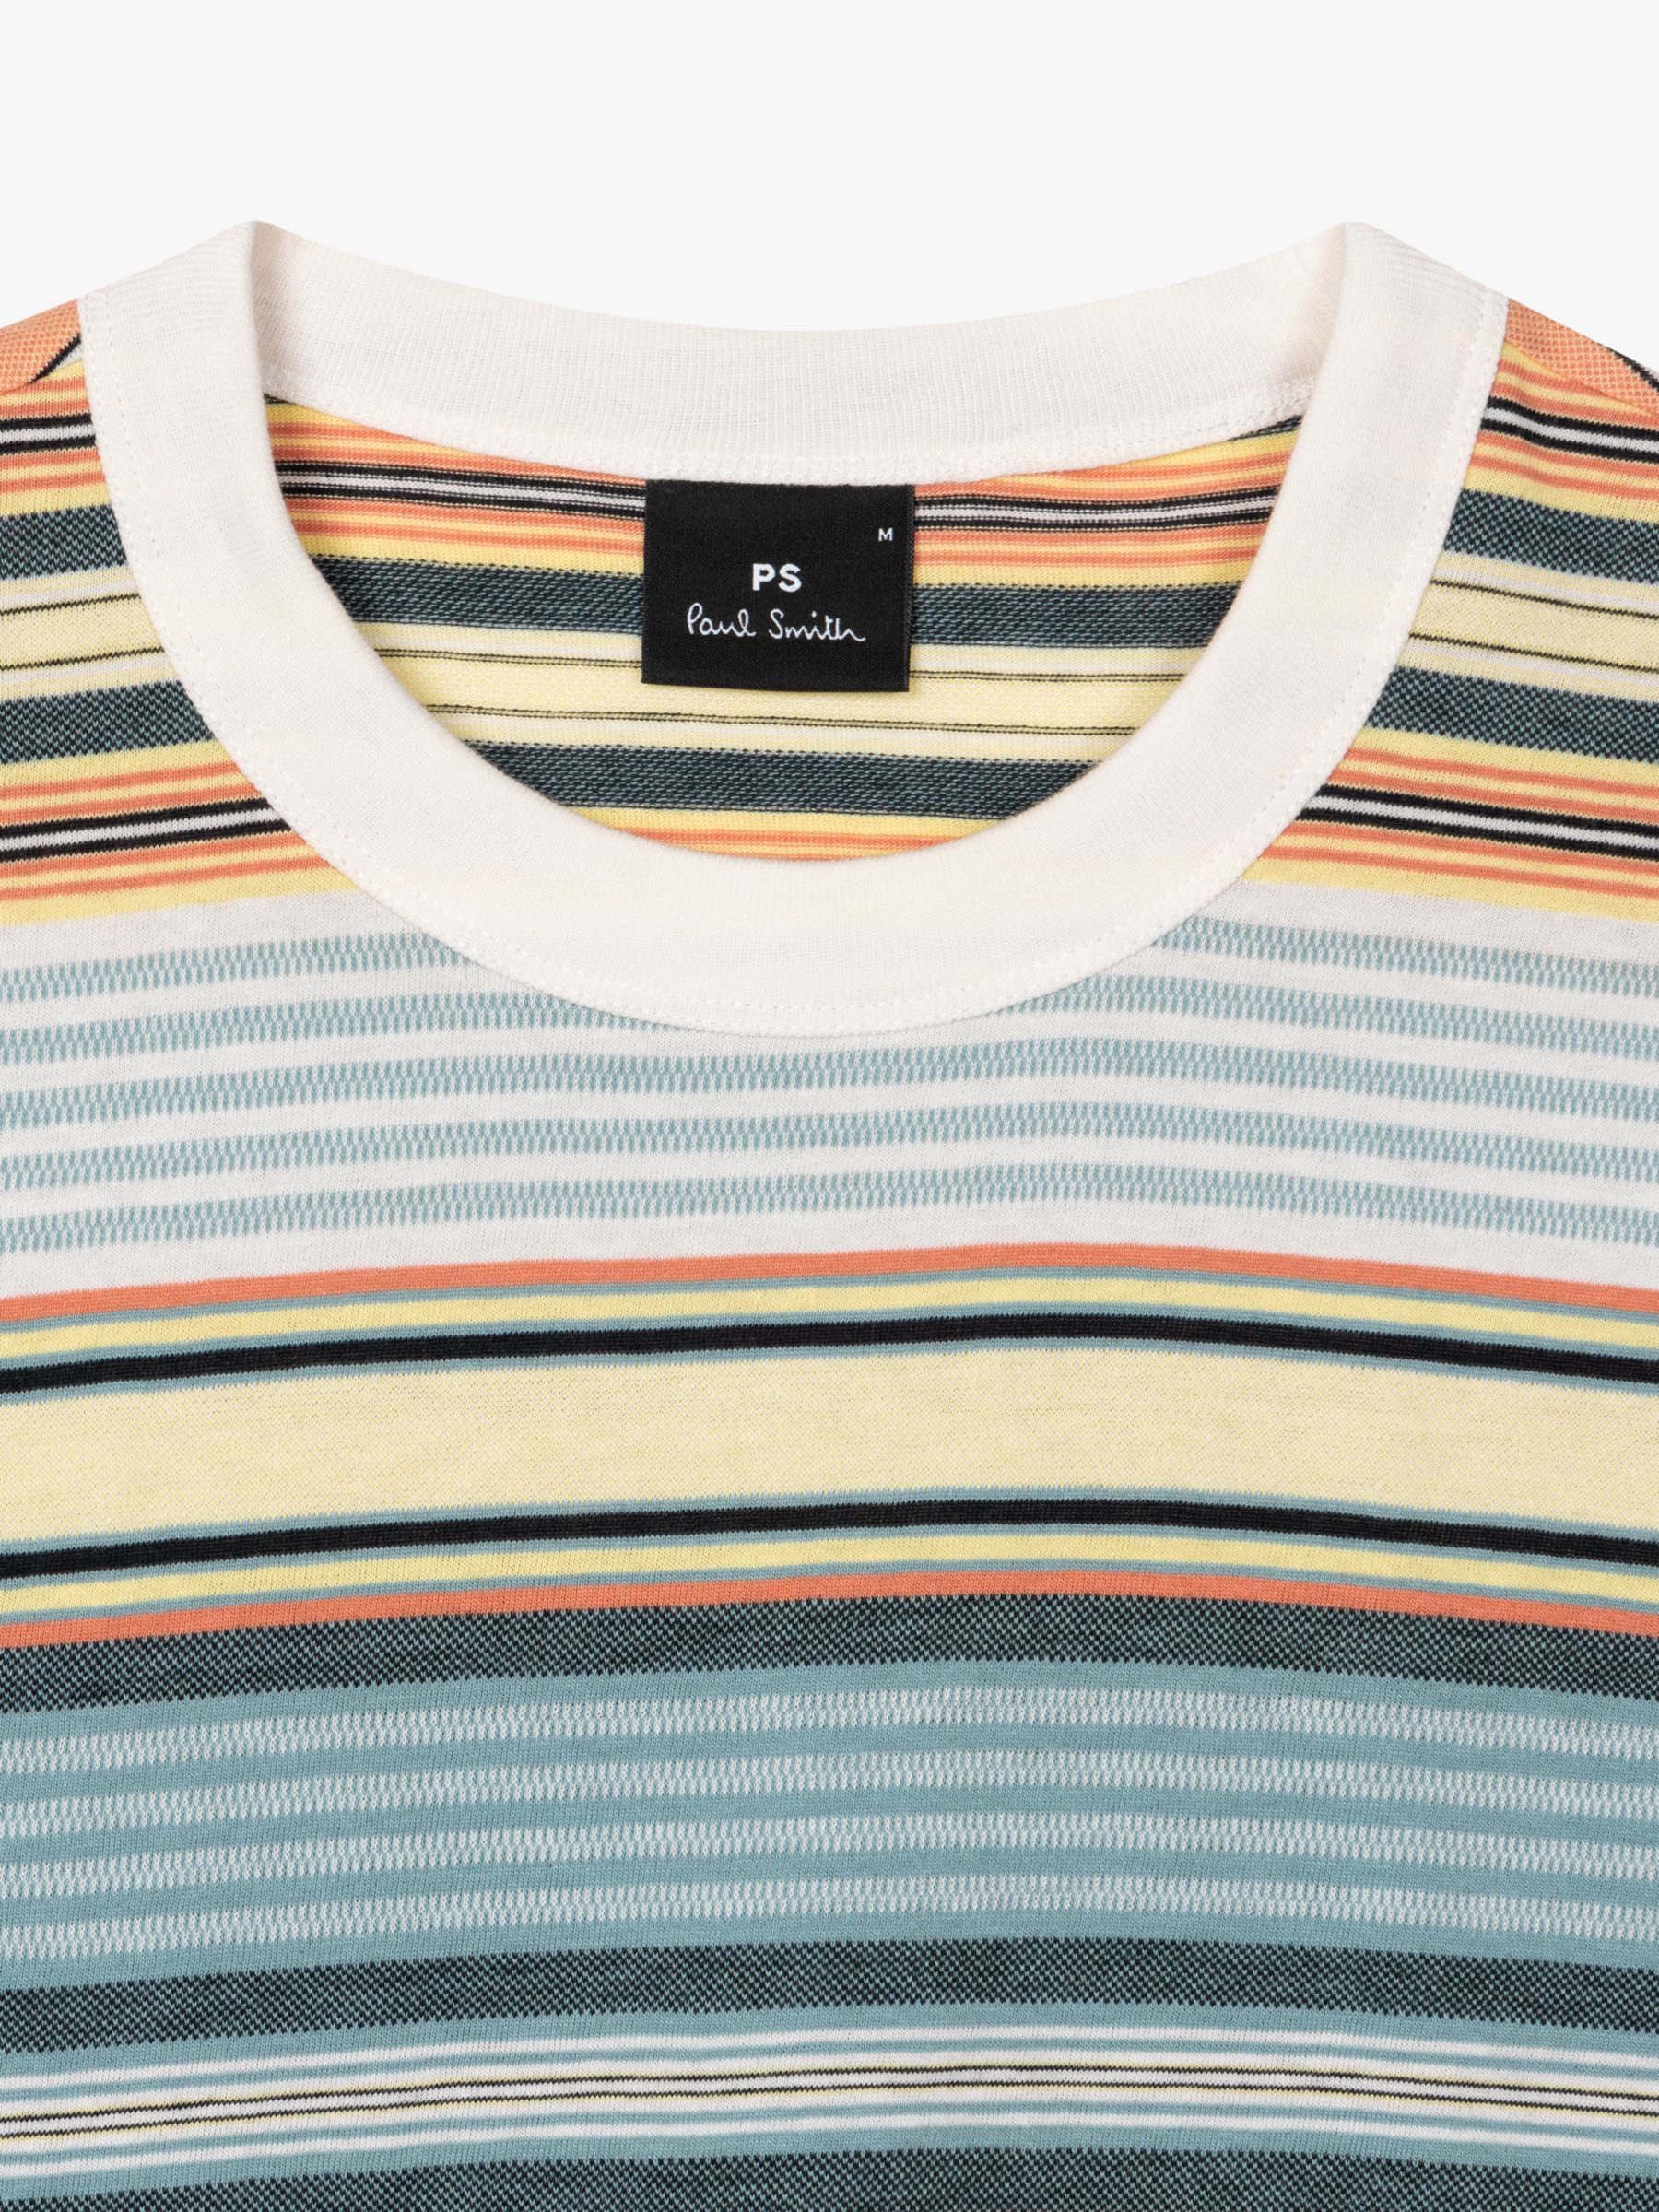 Paul Smith Stripe Short Sleeve T-Shirt, Orange/Multi, XL